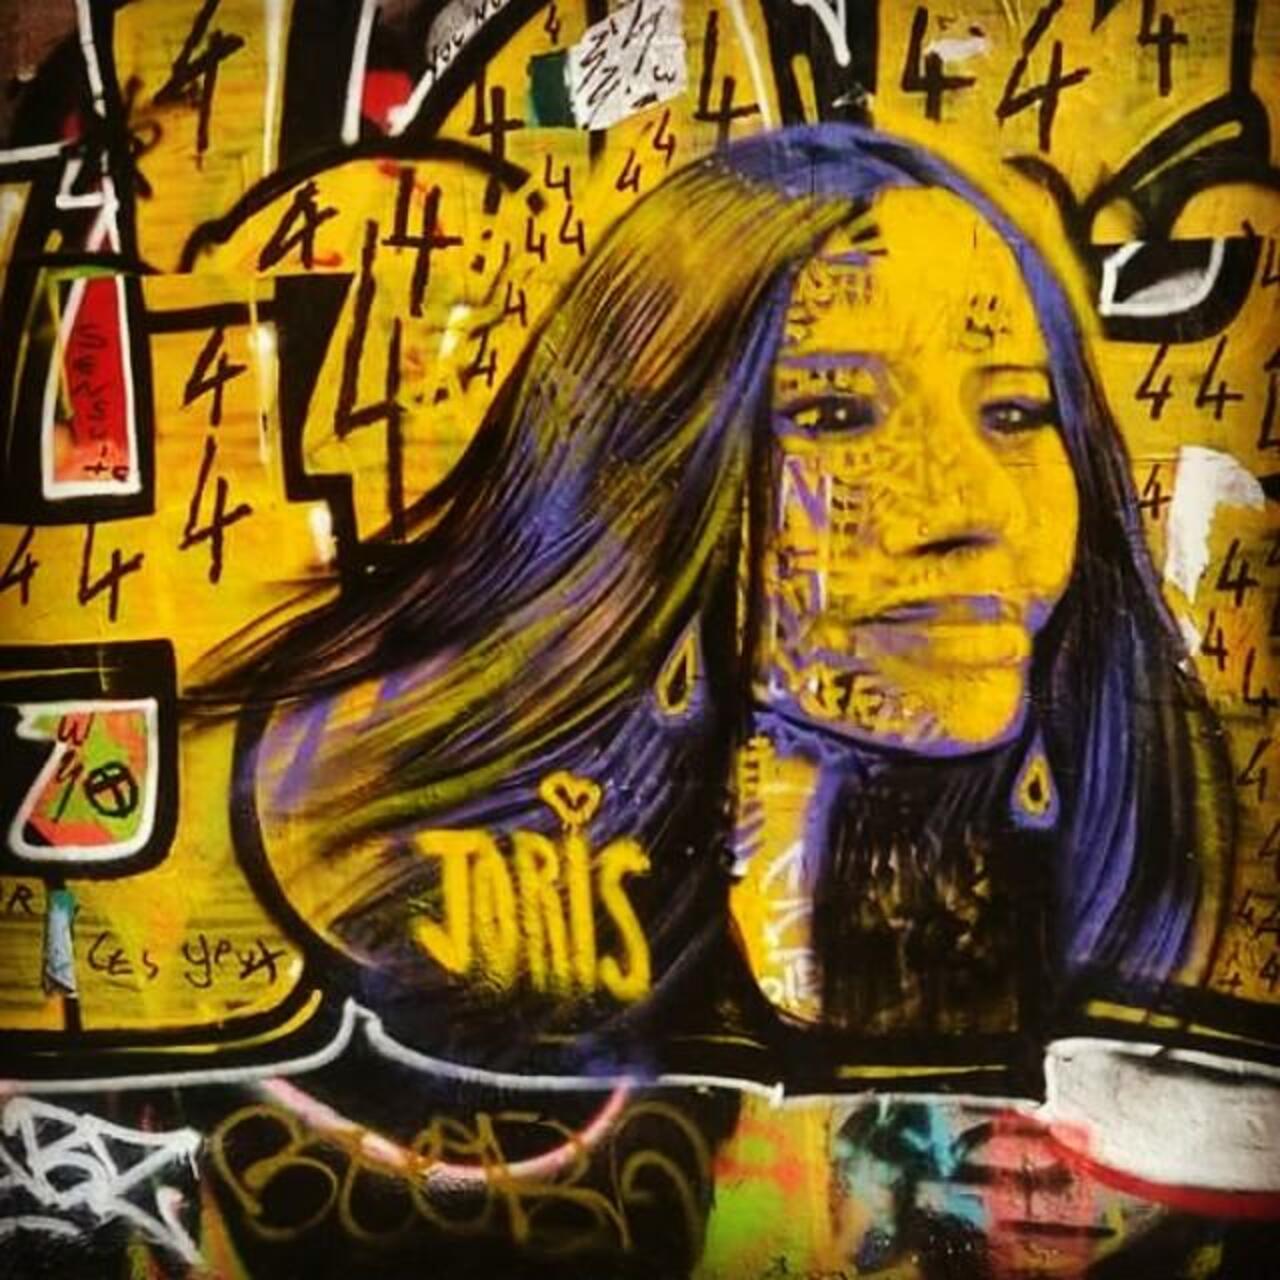 #paris #jorisdelacour #streetart #streetartist #jorisdel #vagueid #artiste #art #spraycan #urbanart #graffiti #fres… http://t.co/Kp2orr8x6u